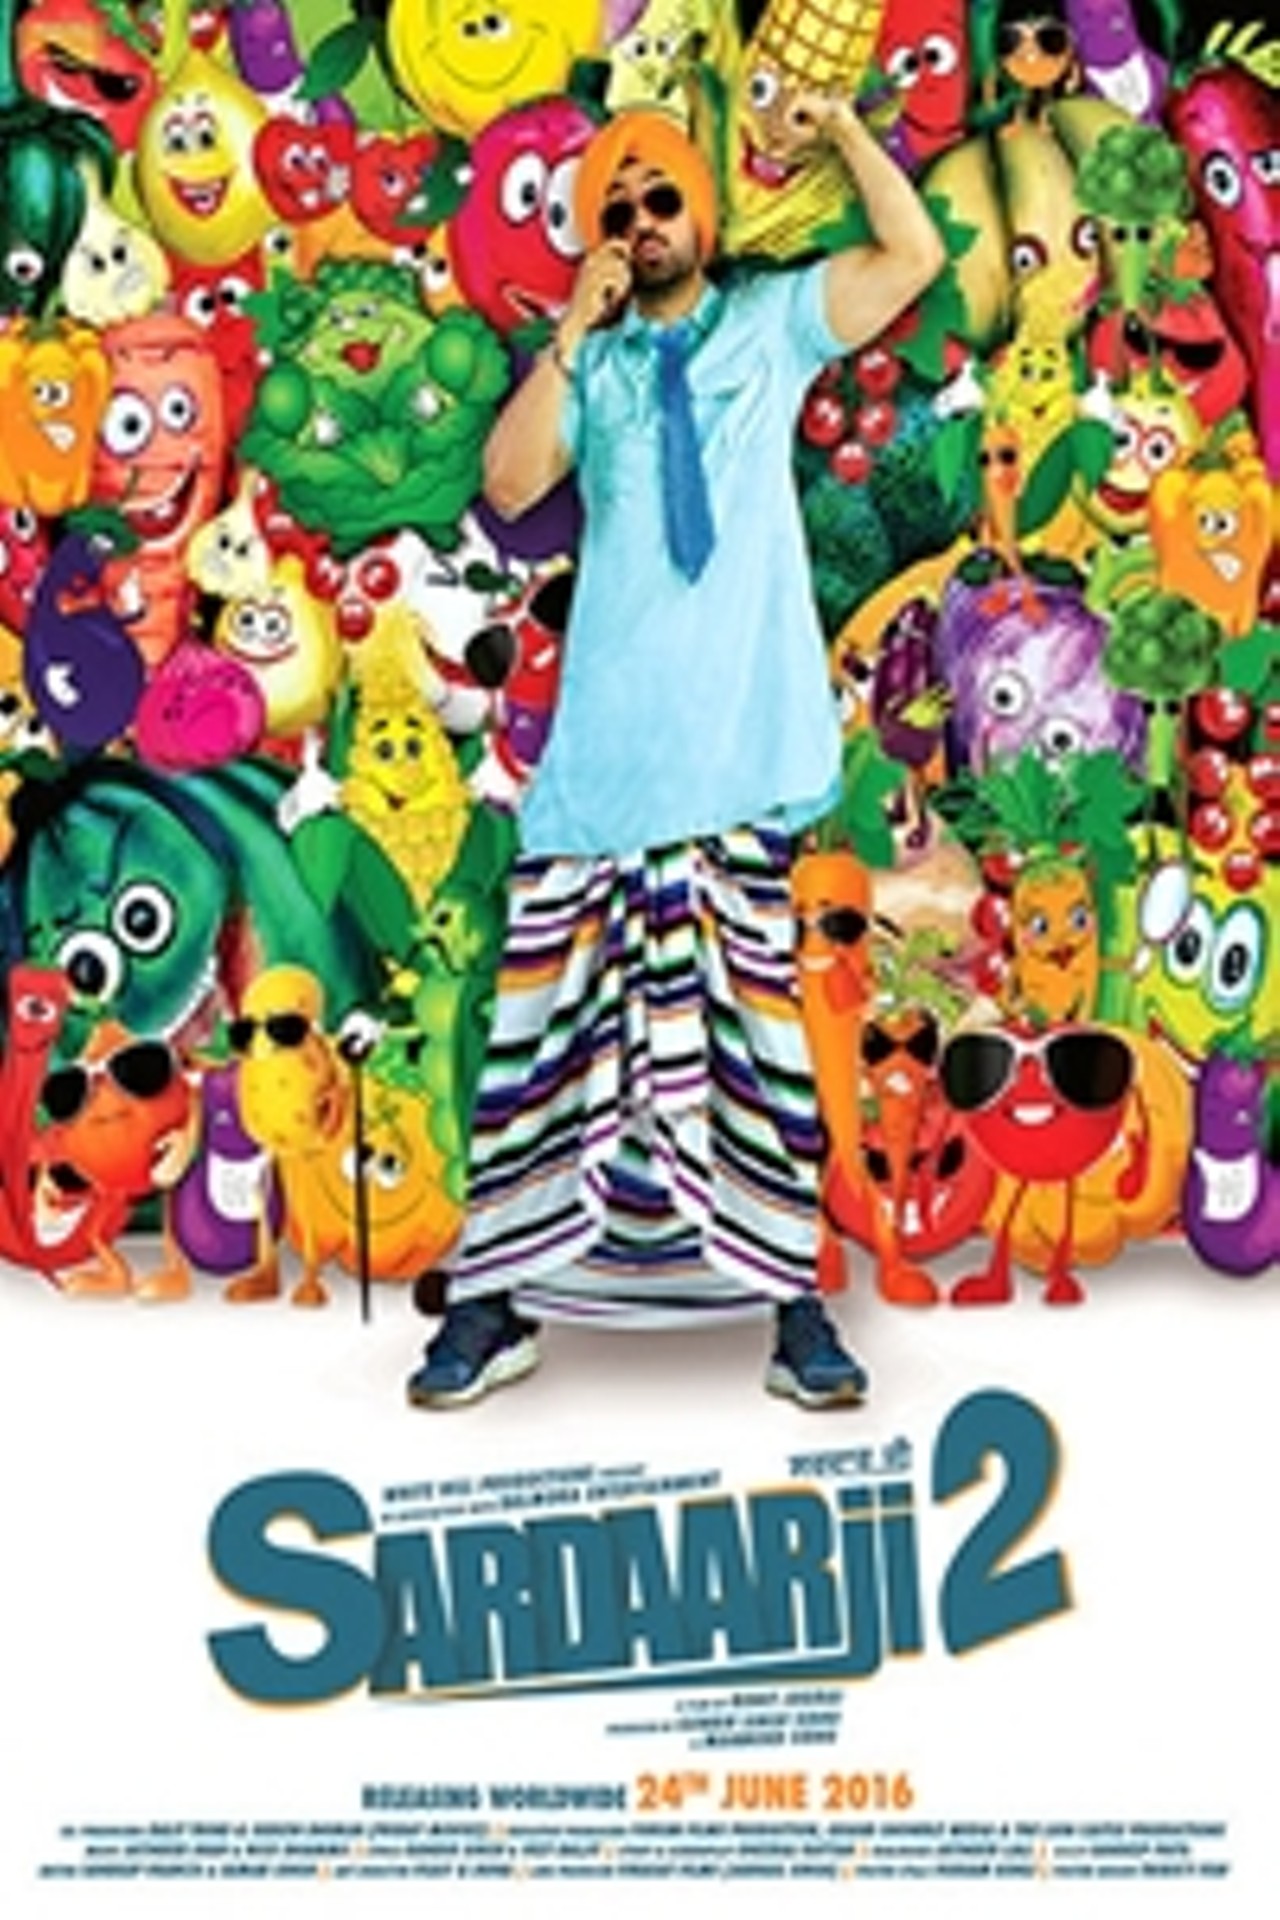 Sardaarji 2 (2016) Main Poster